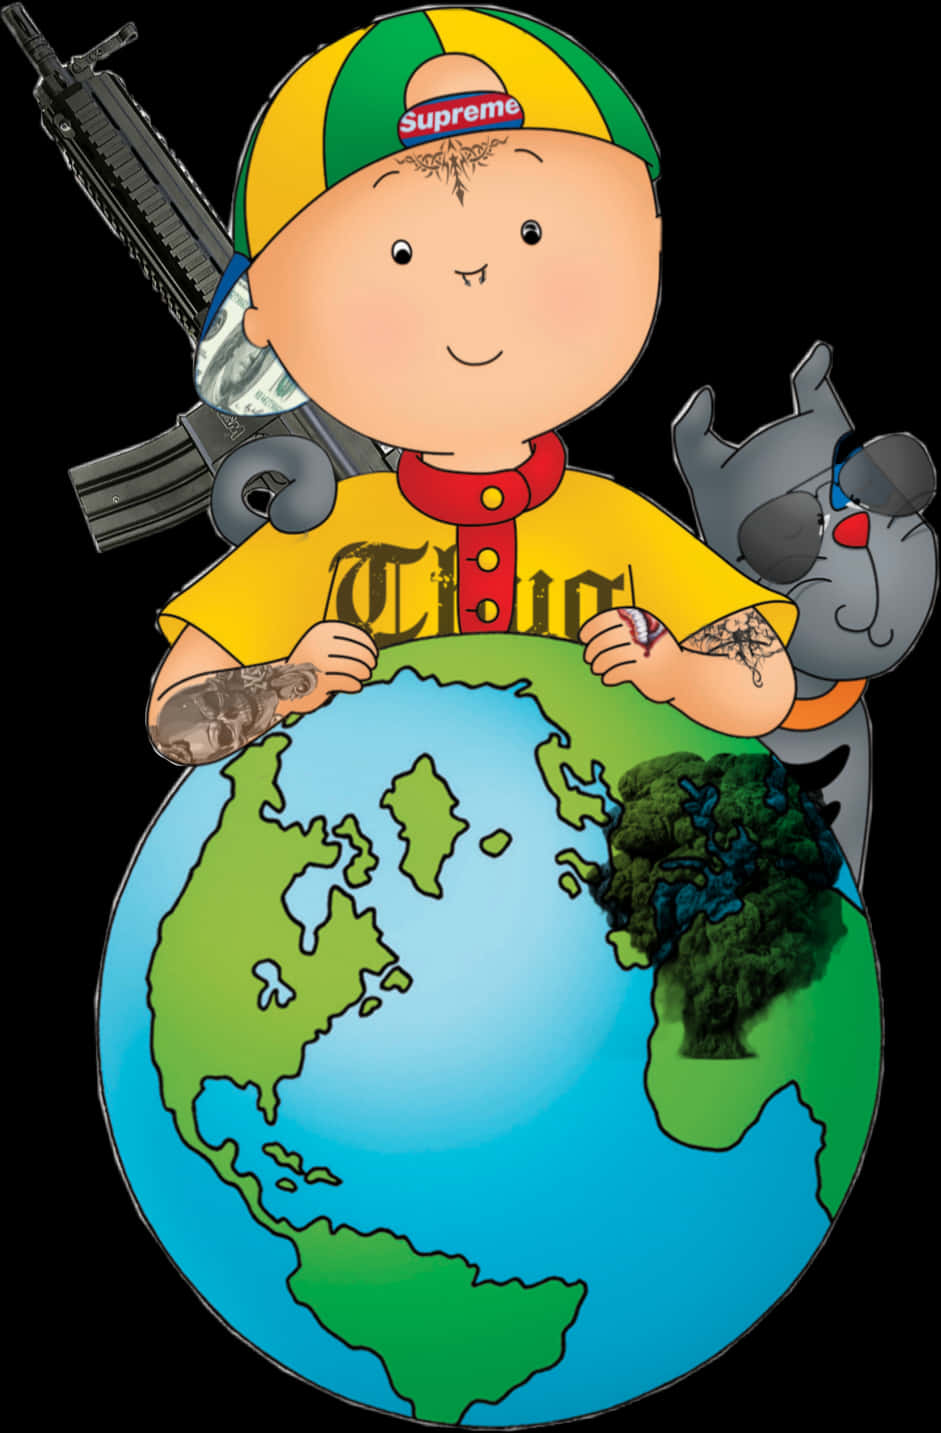 A Cartoon Of A Boy Holding A Gun And A Planet